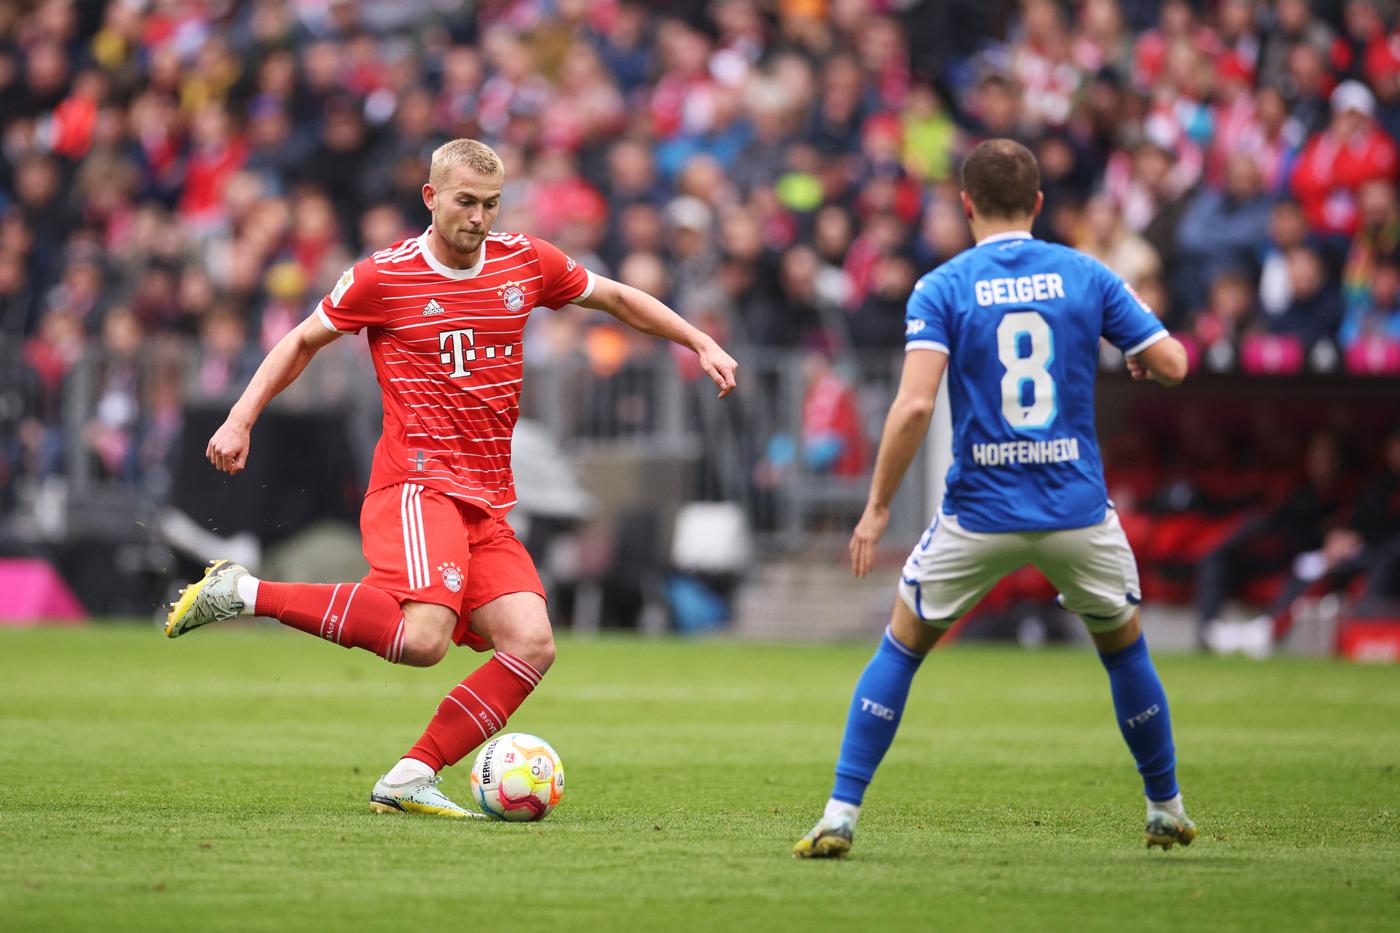 Bayern - Hoffenheim: where to watch, online broadcast (April 15)